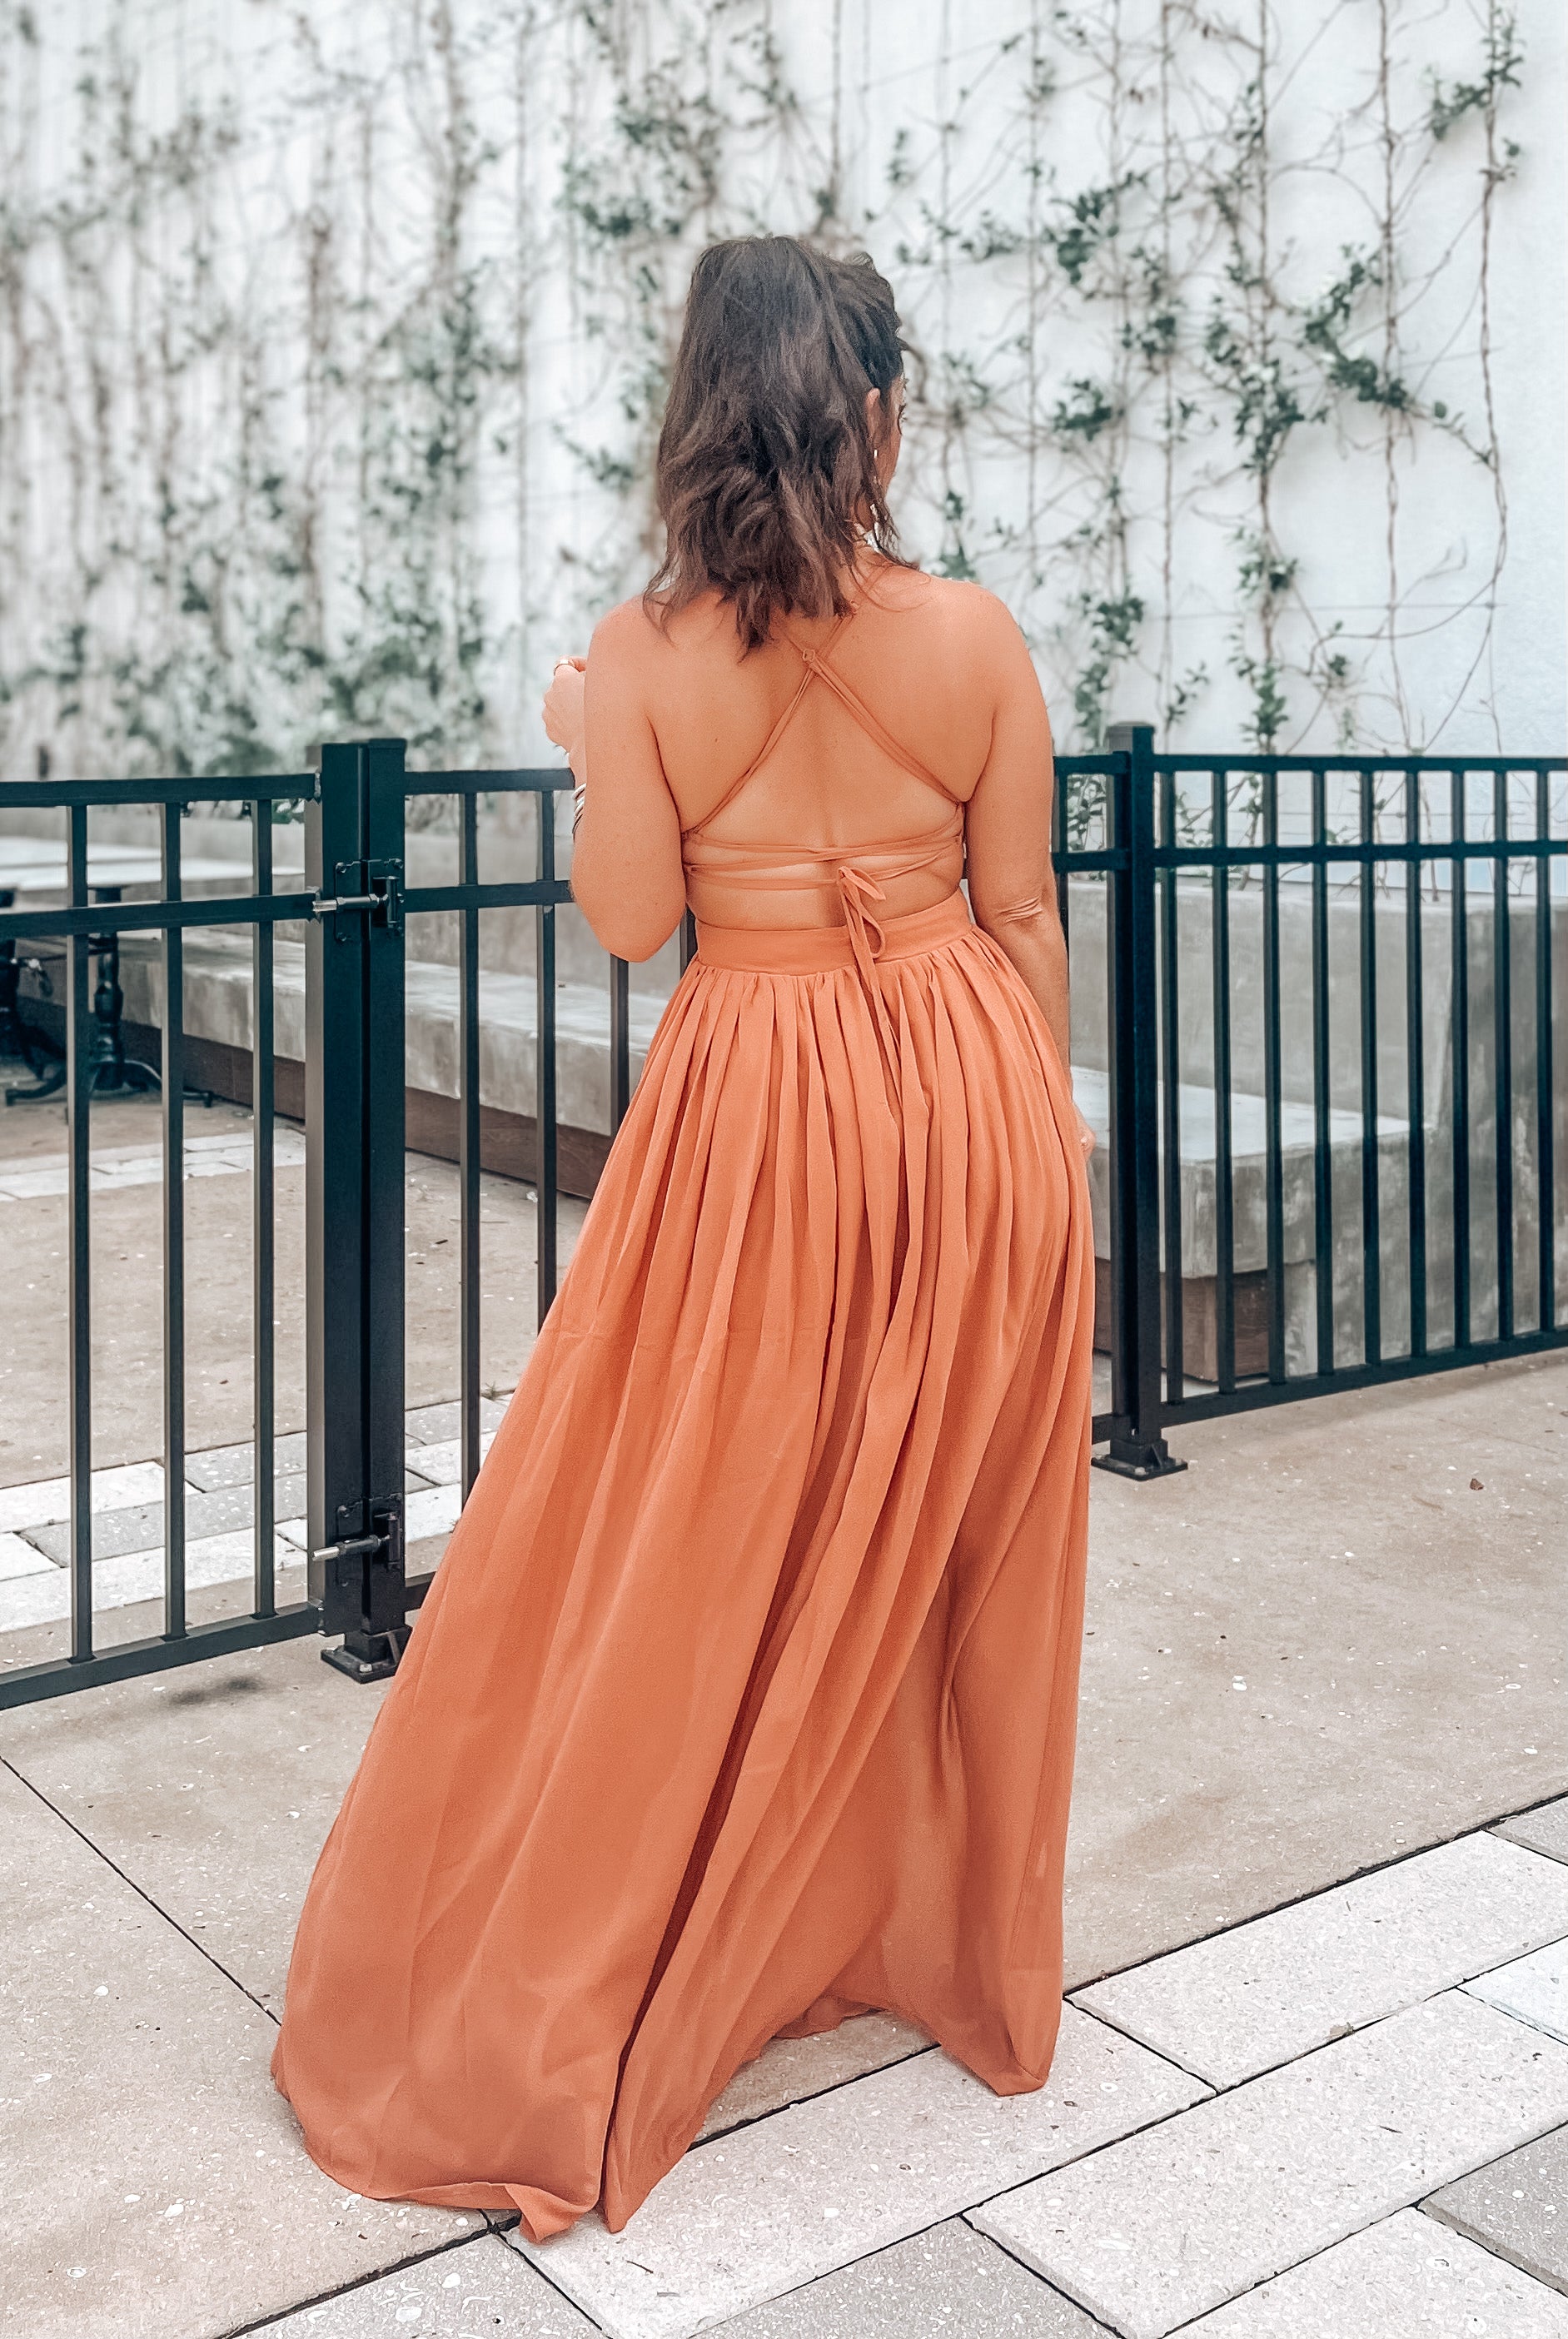 Soft Orange Lace Back Dress